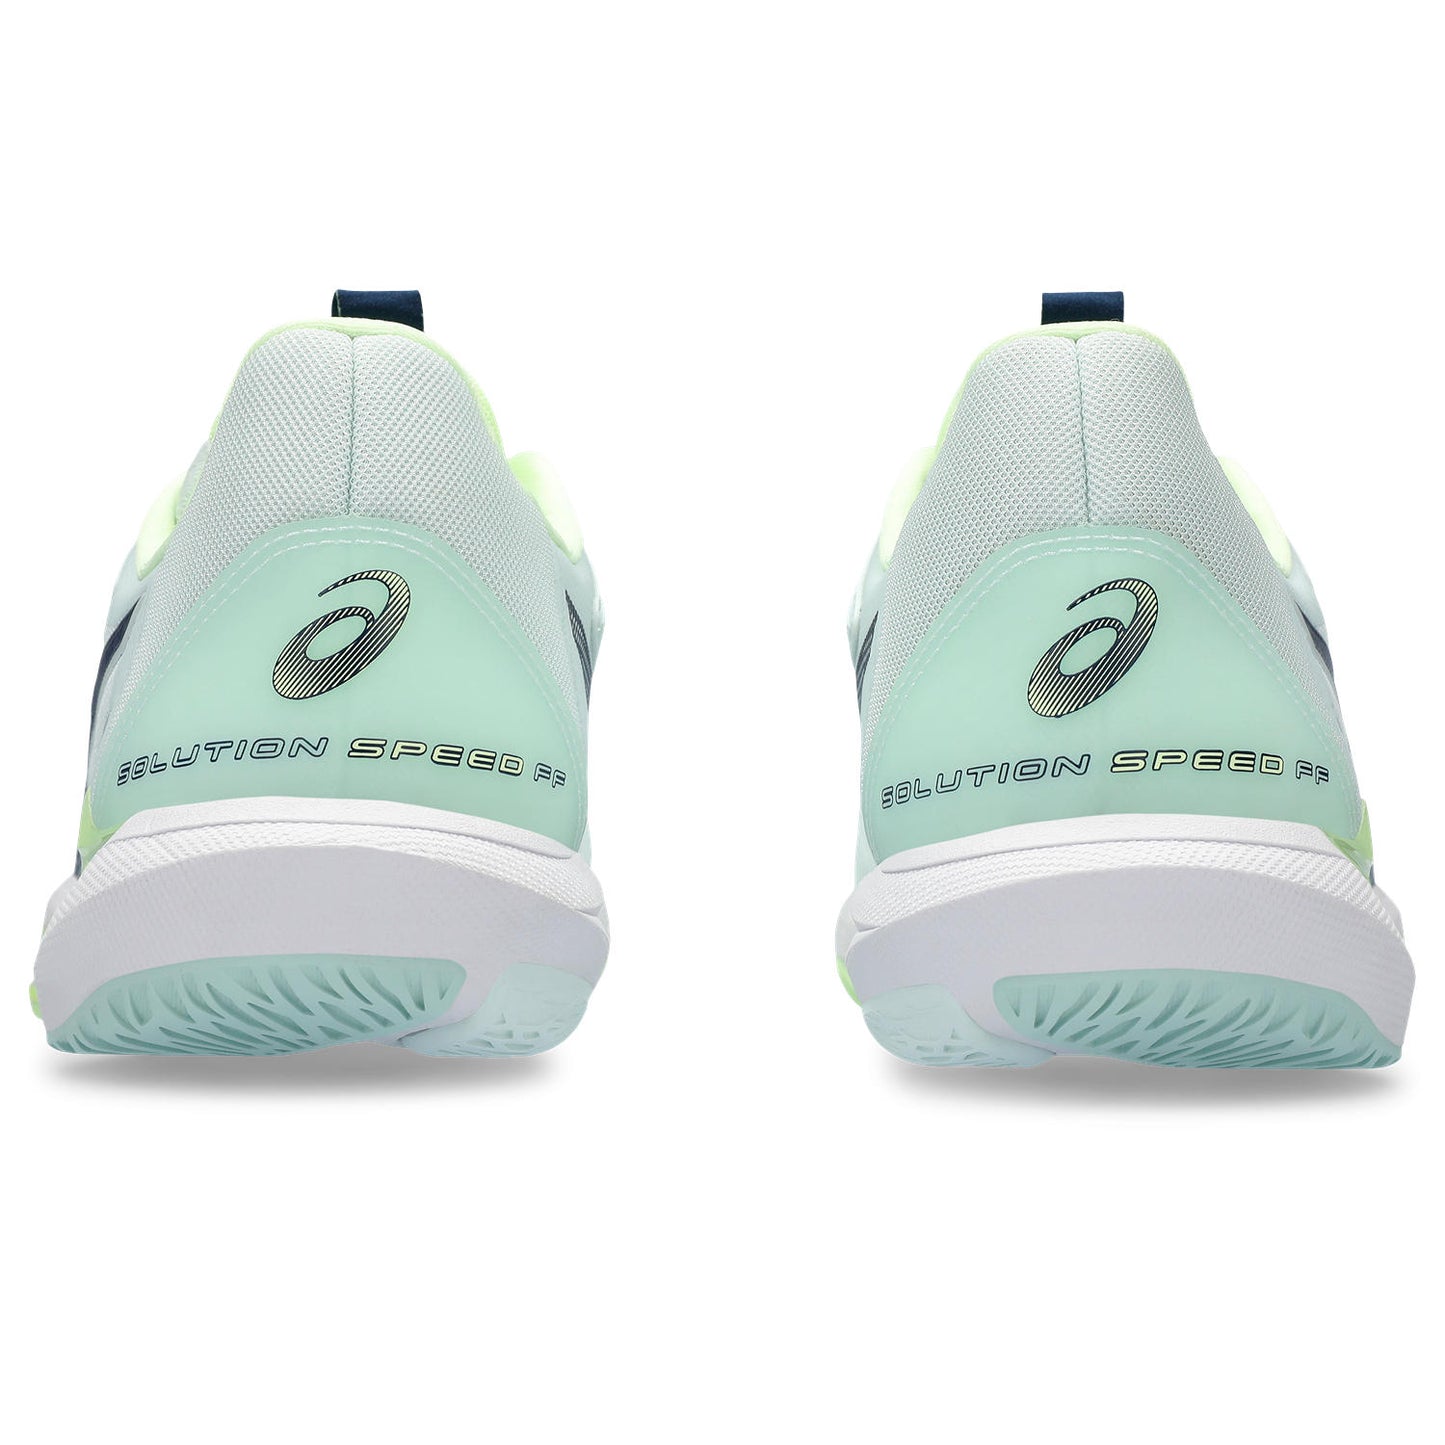 Asics Solution Speed FF women's tennis shoes 250.300 Mint/Blue